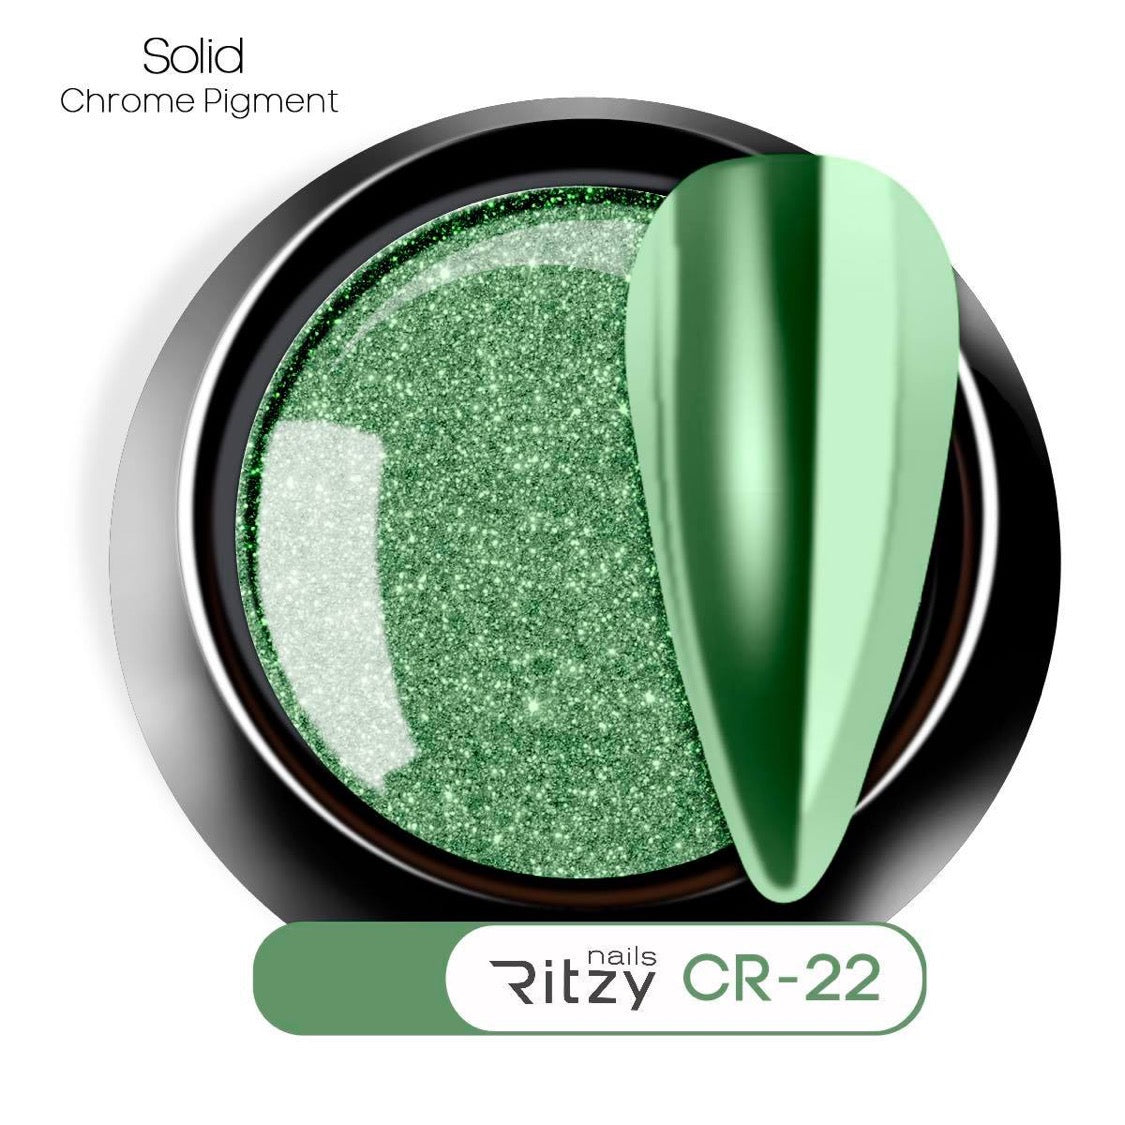 Chrome pigment CR-22